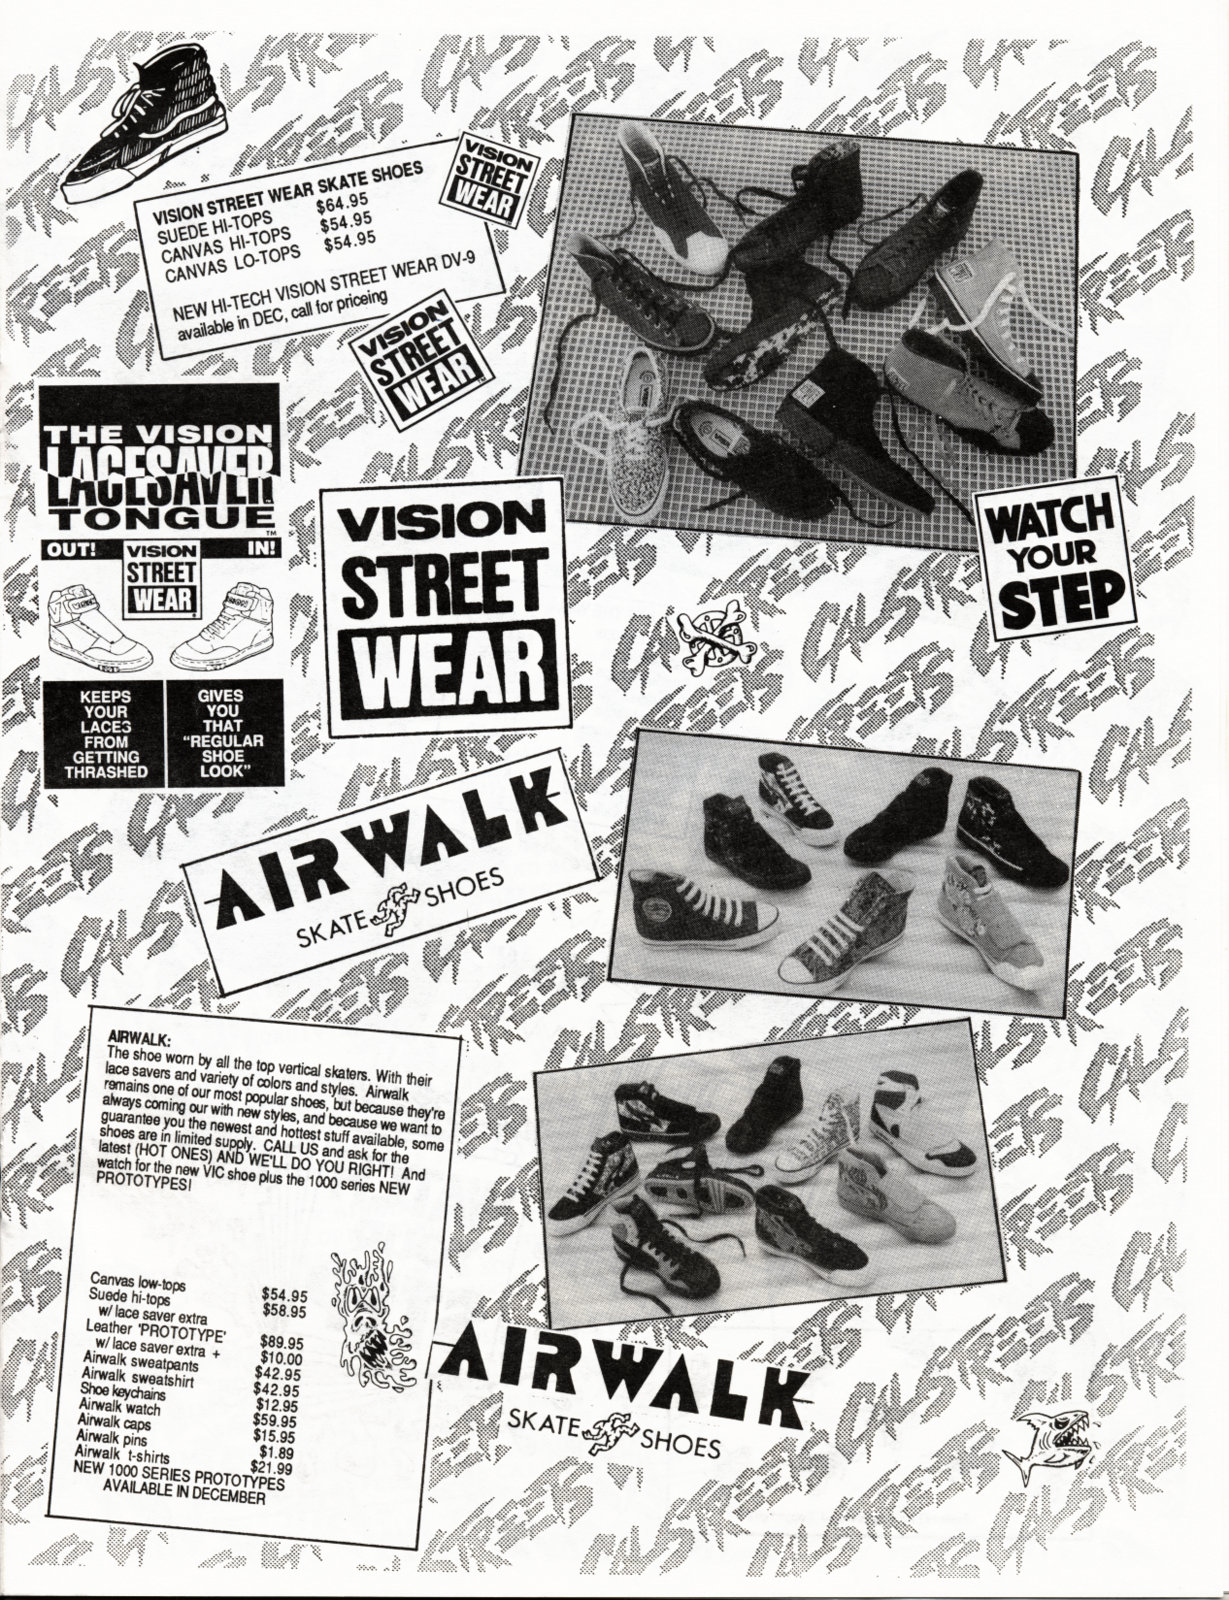 CalStreets-Spike-Hardware-Retail-Airwalk-Vision-13.jpg